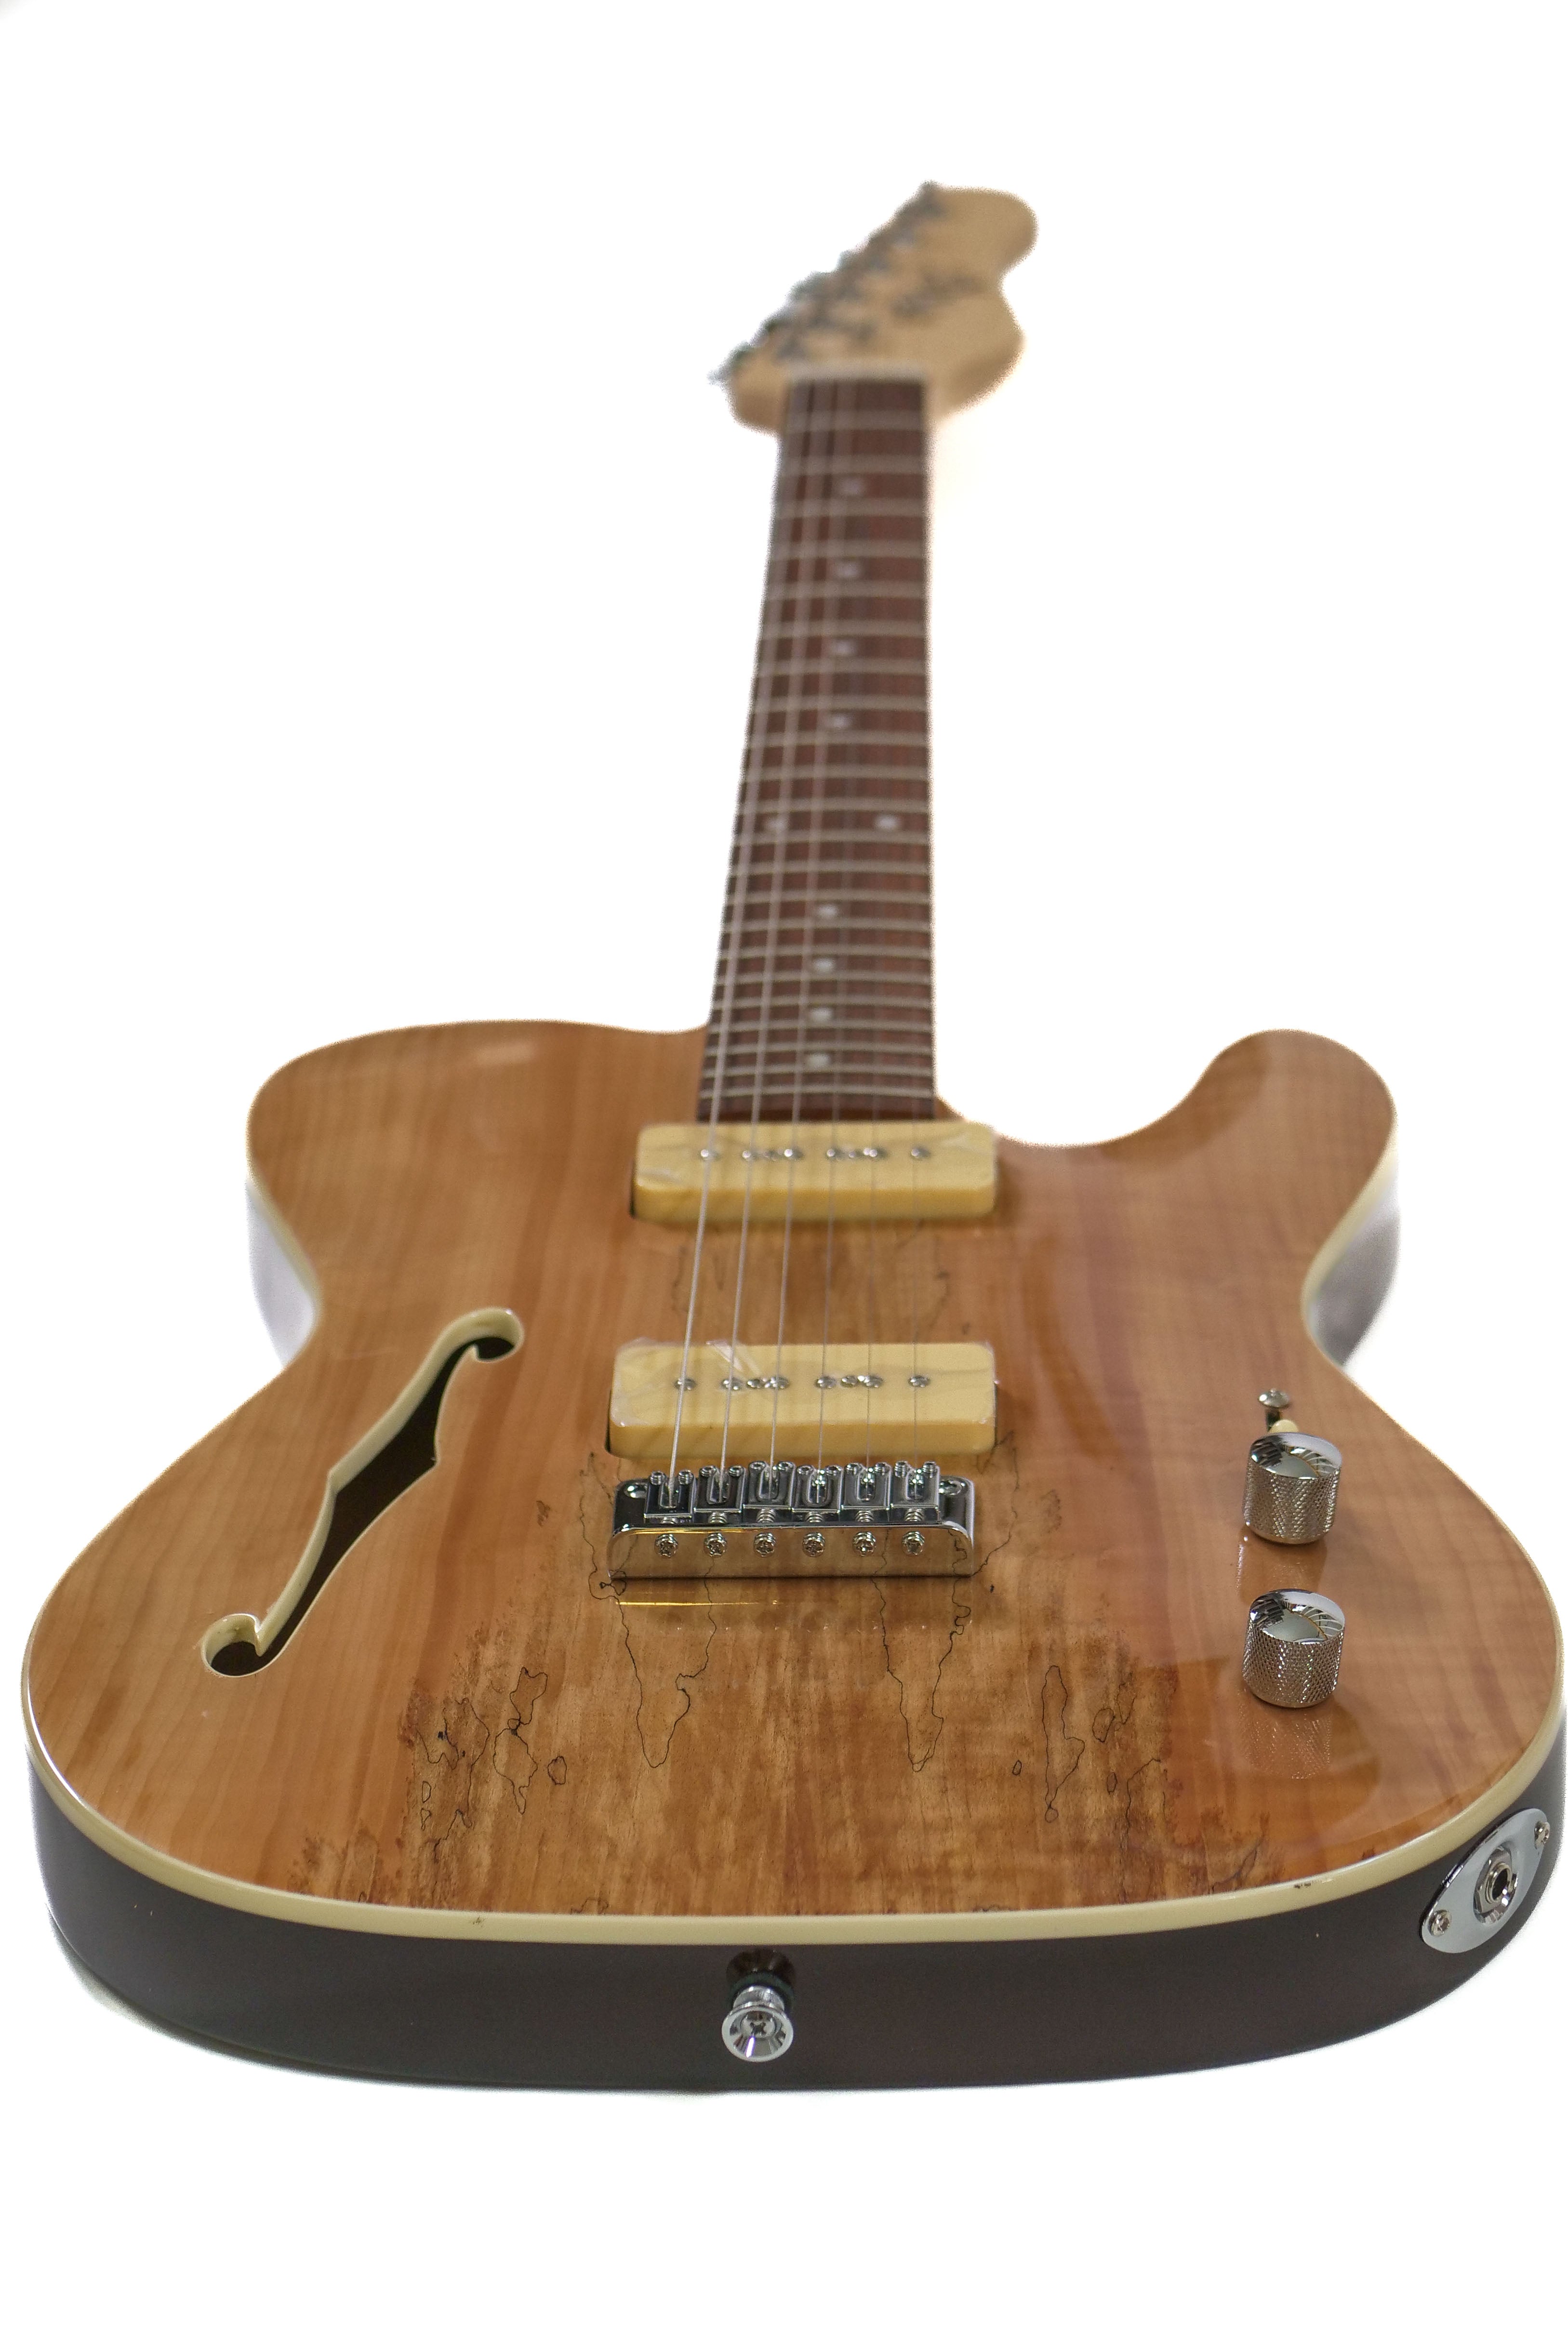 Michael Kelly Thinline Electric Guitar w/ Pickup